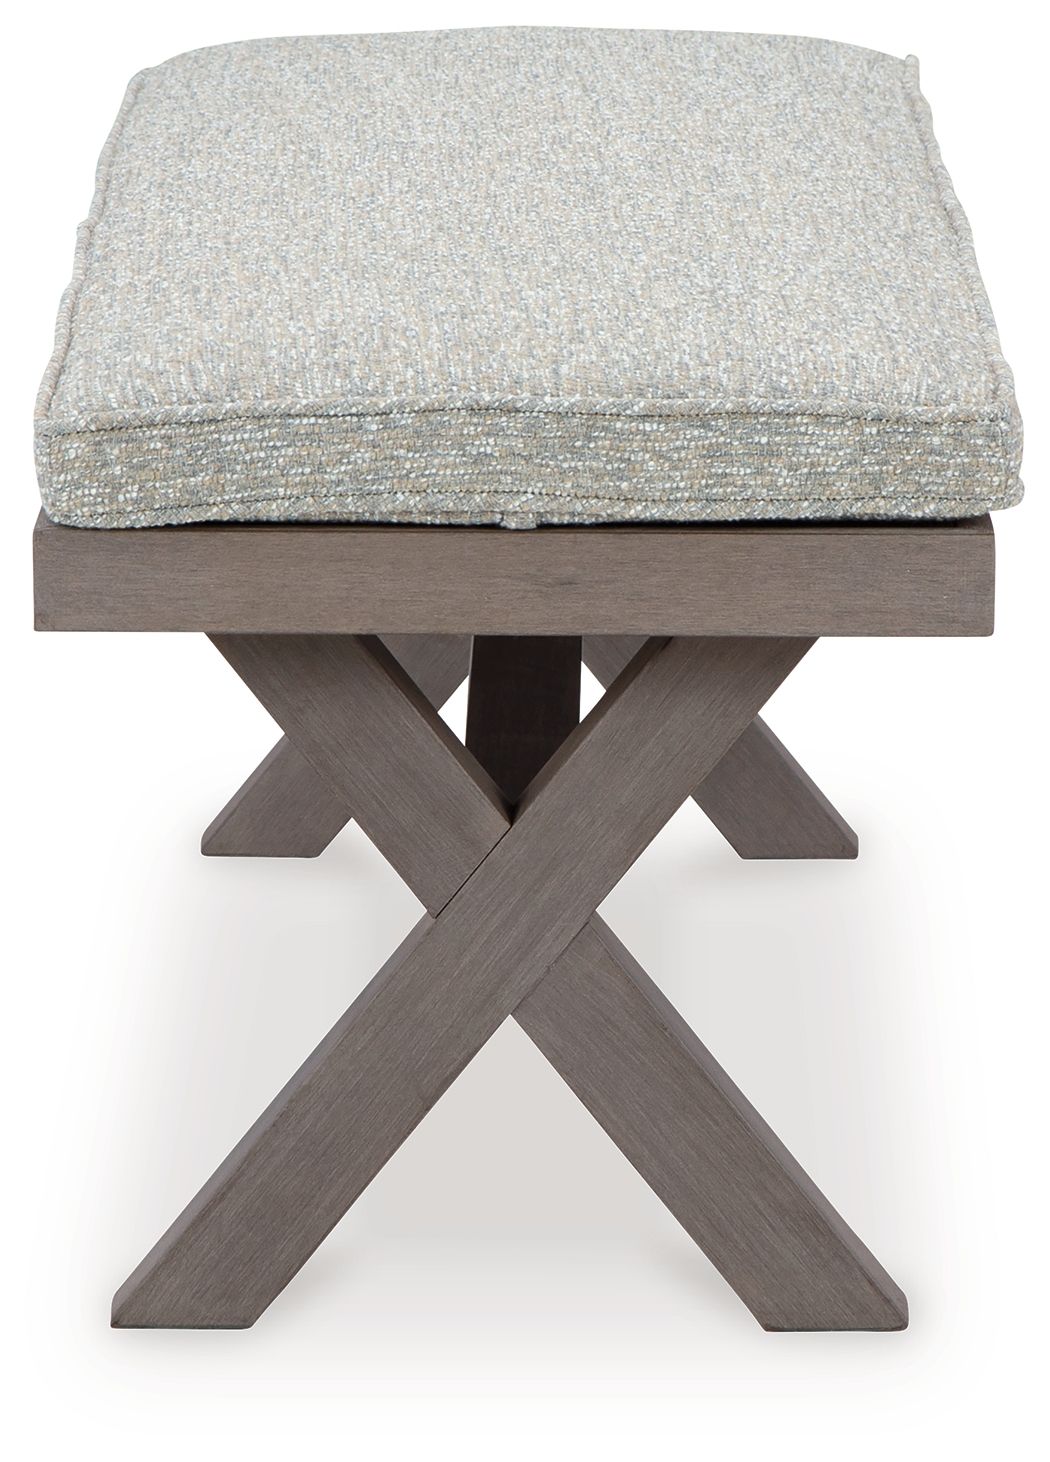 Hillside Barn - Gray / Brown - Bench With Cushion - 5th Avenue Furniture